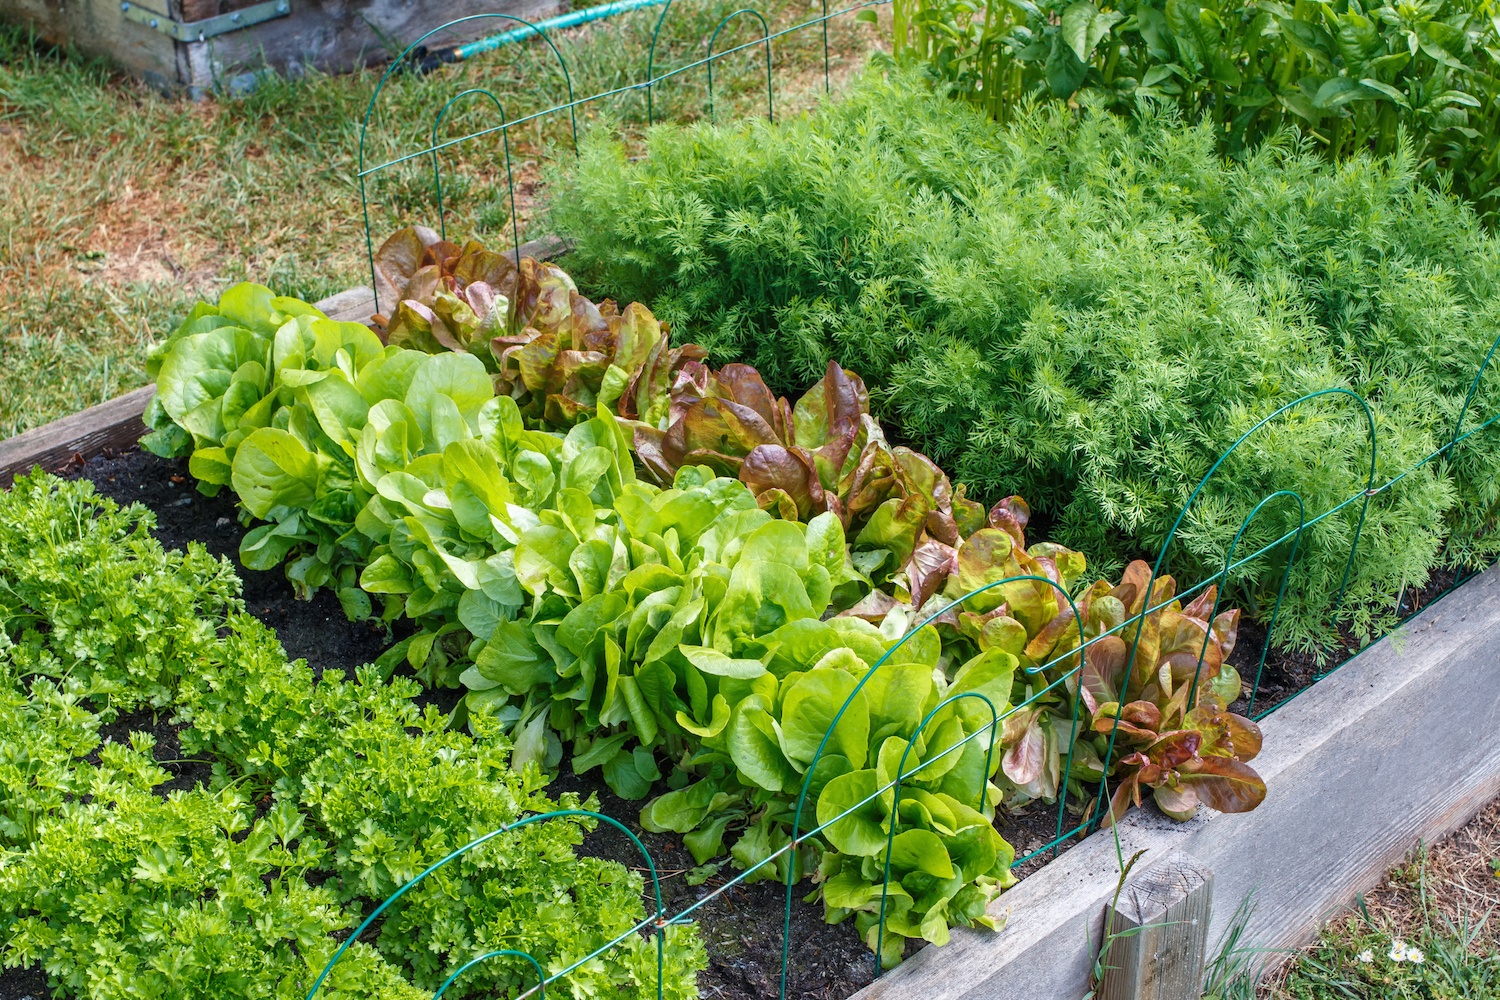 Rows of green vegetables grow an urban community garden. August 2021